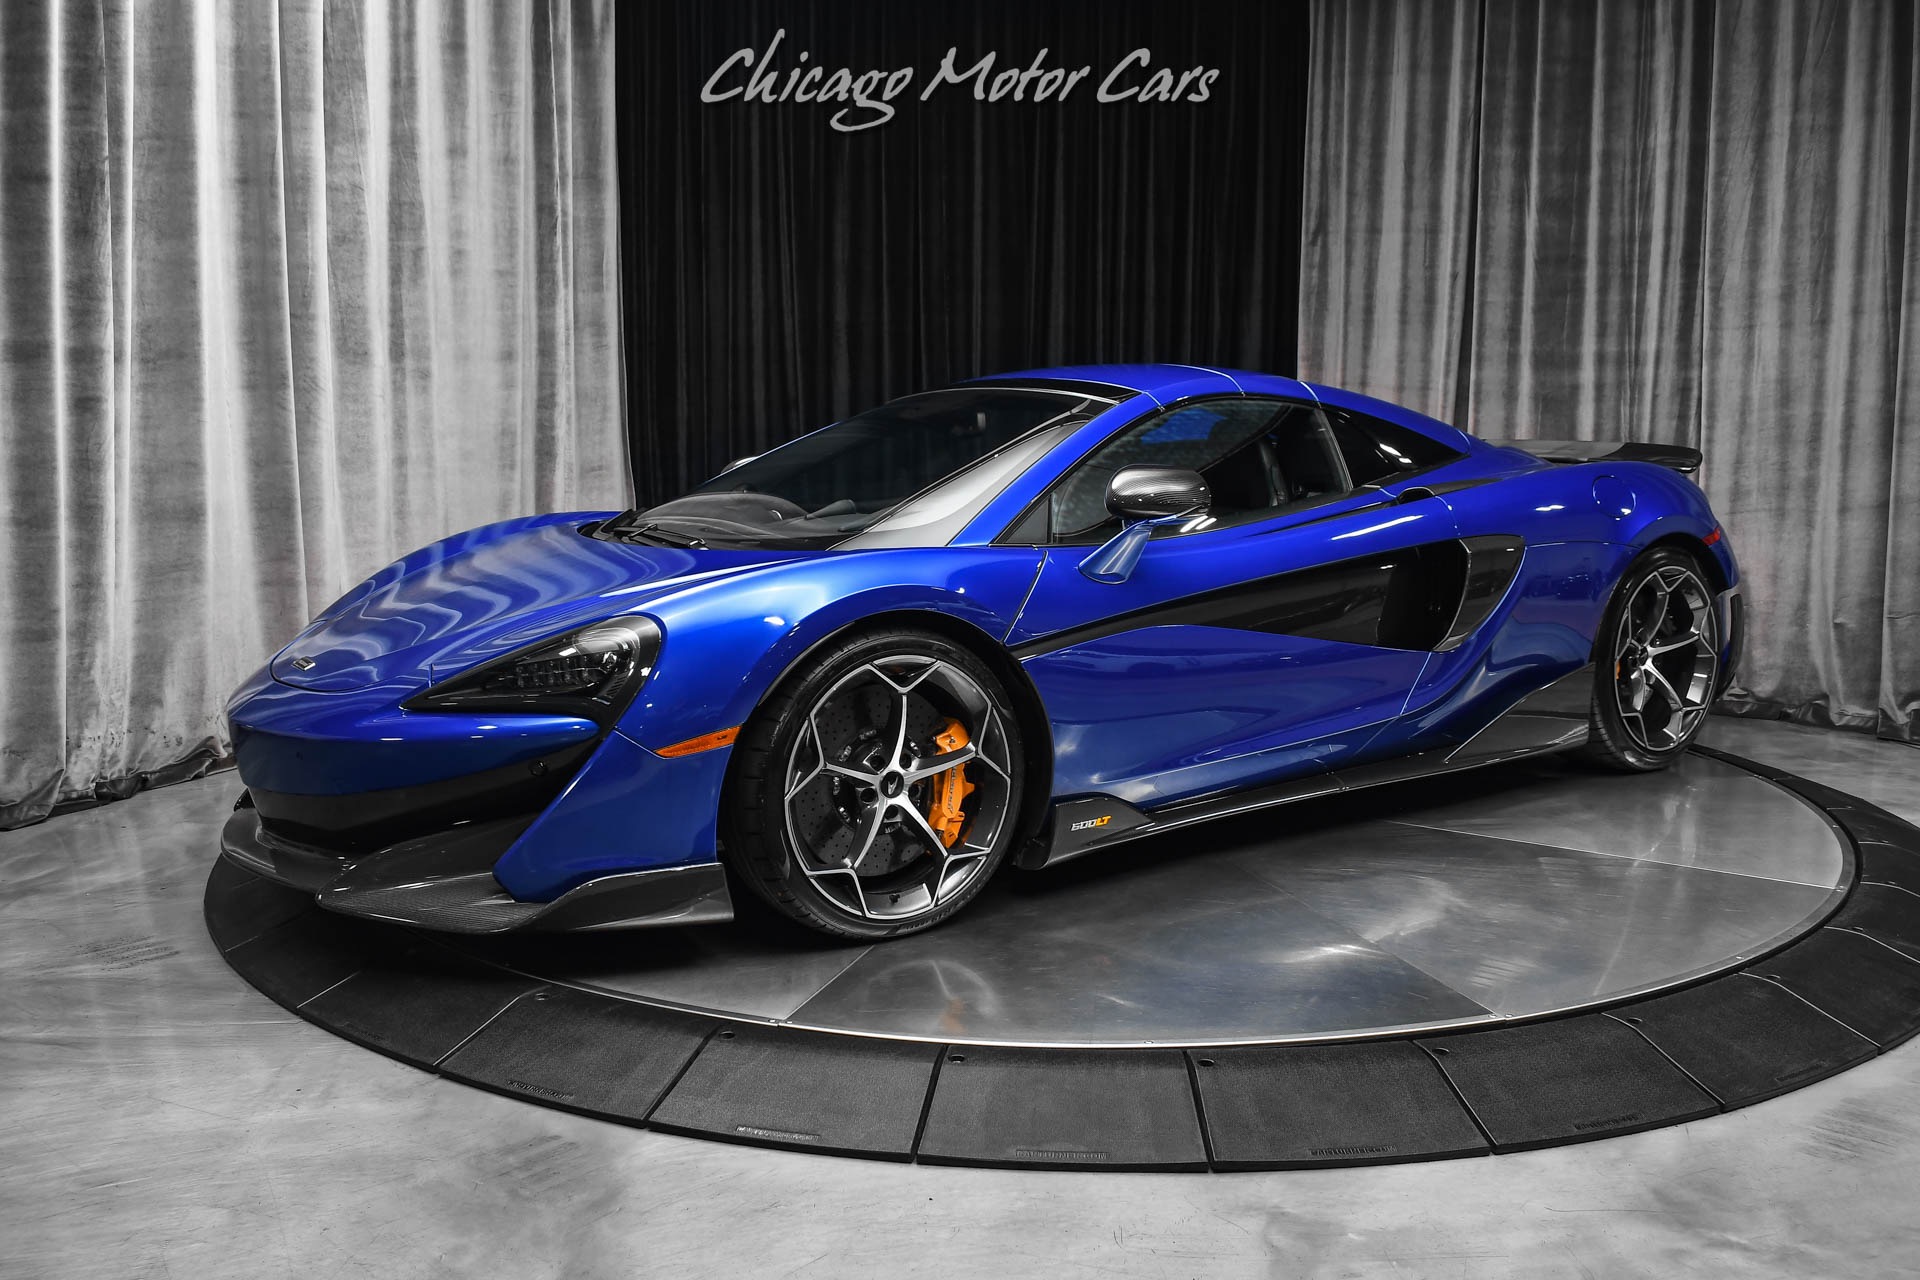 Used-2020-McLaren-600LT-Spider-MSO-Burton-Blue-Tons-of-Carbon-Fiber-Carbon-Ceramic-Brakes-Loaded